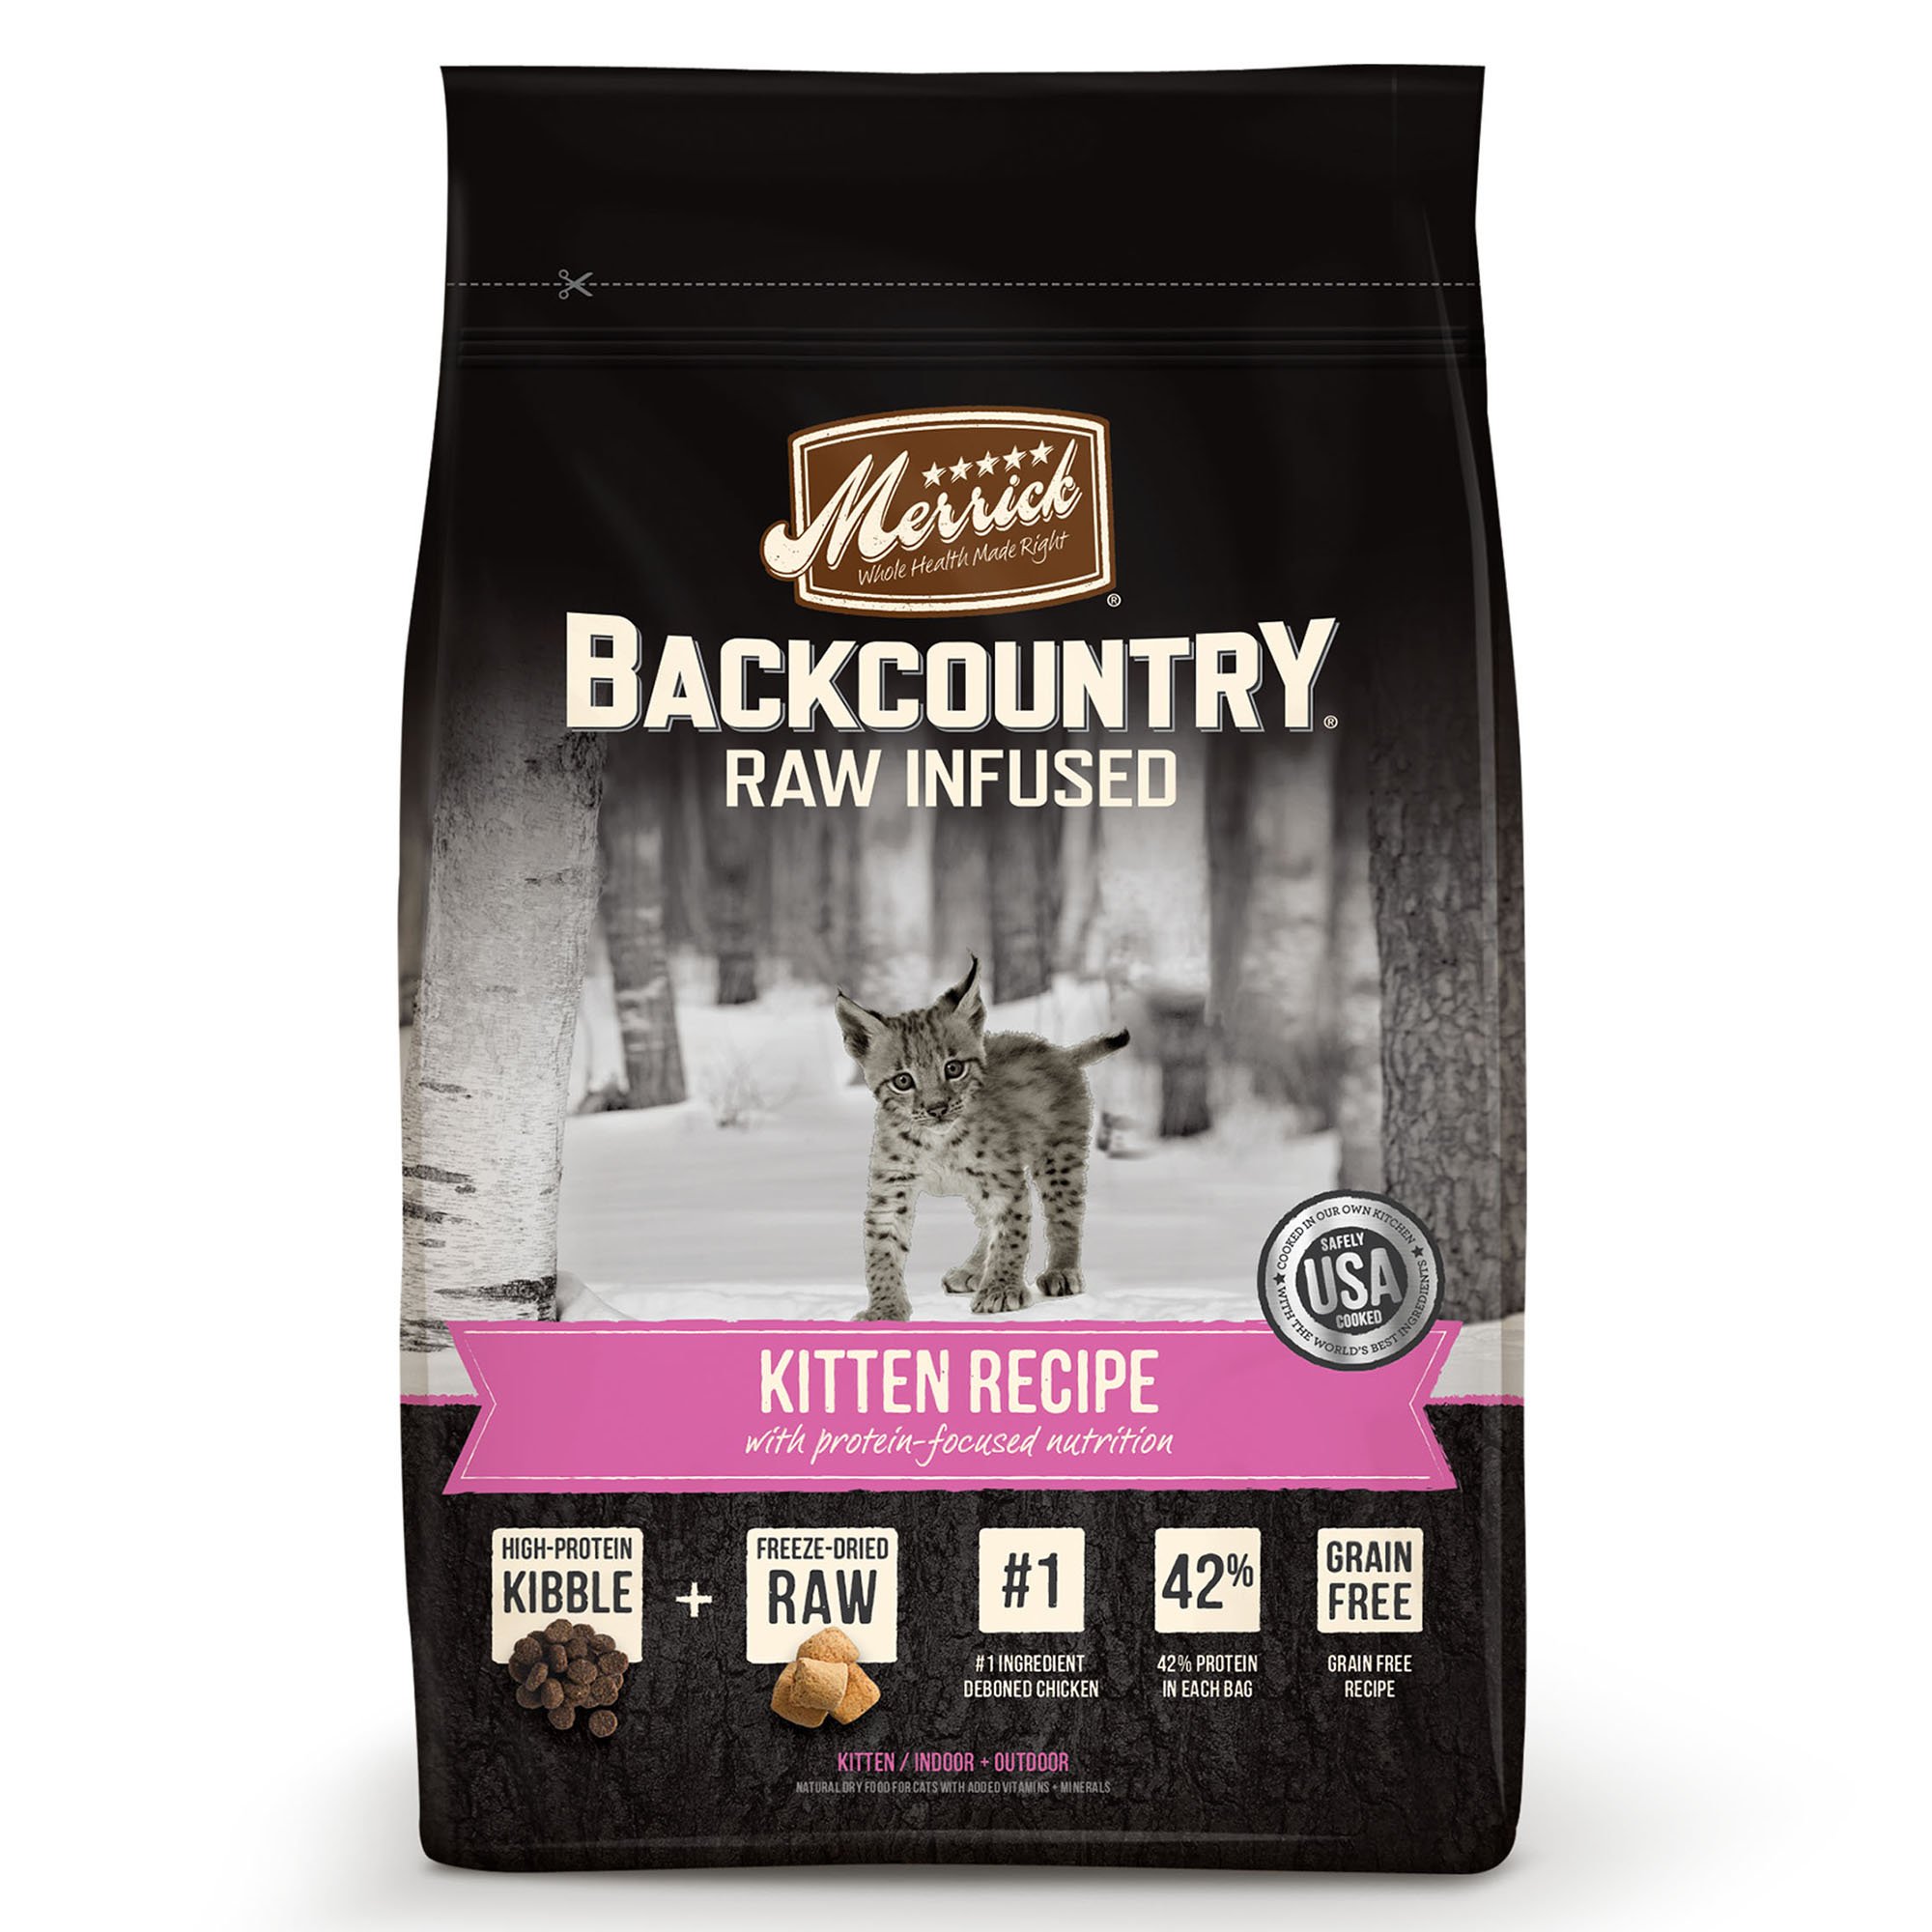 Merrick Backcountry Grain Free Raw Infused Kitten Recipe Dry Cat Food